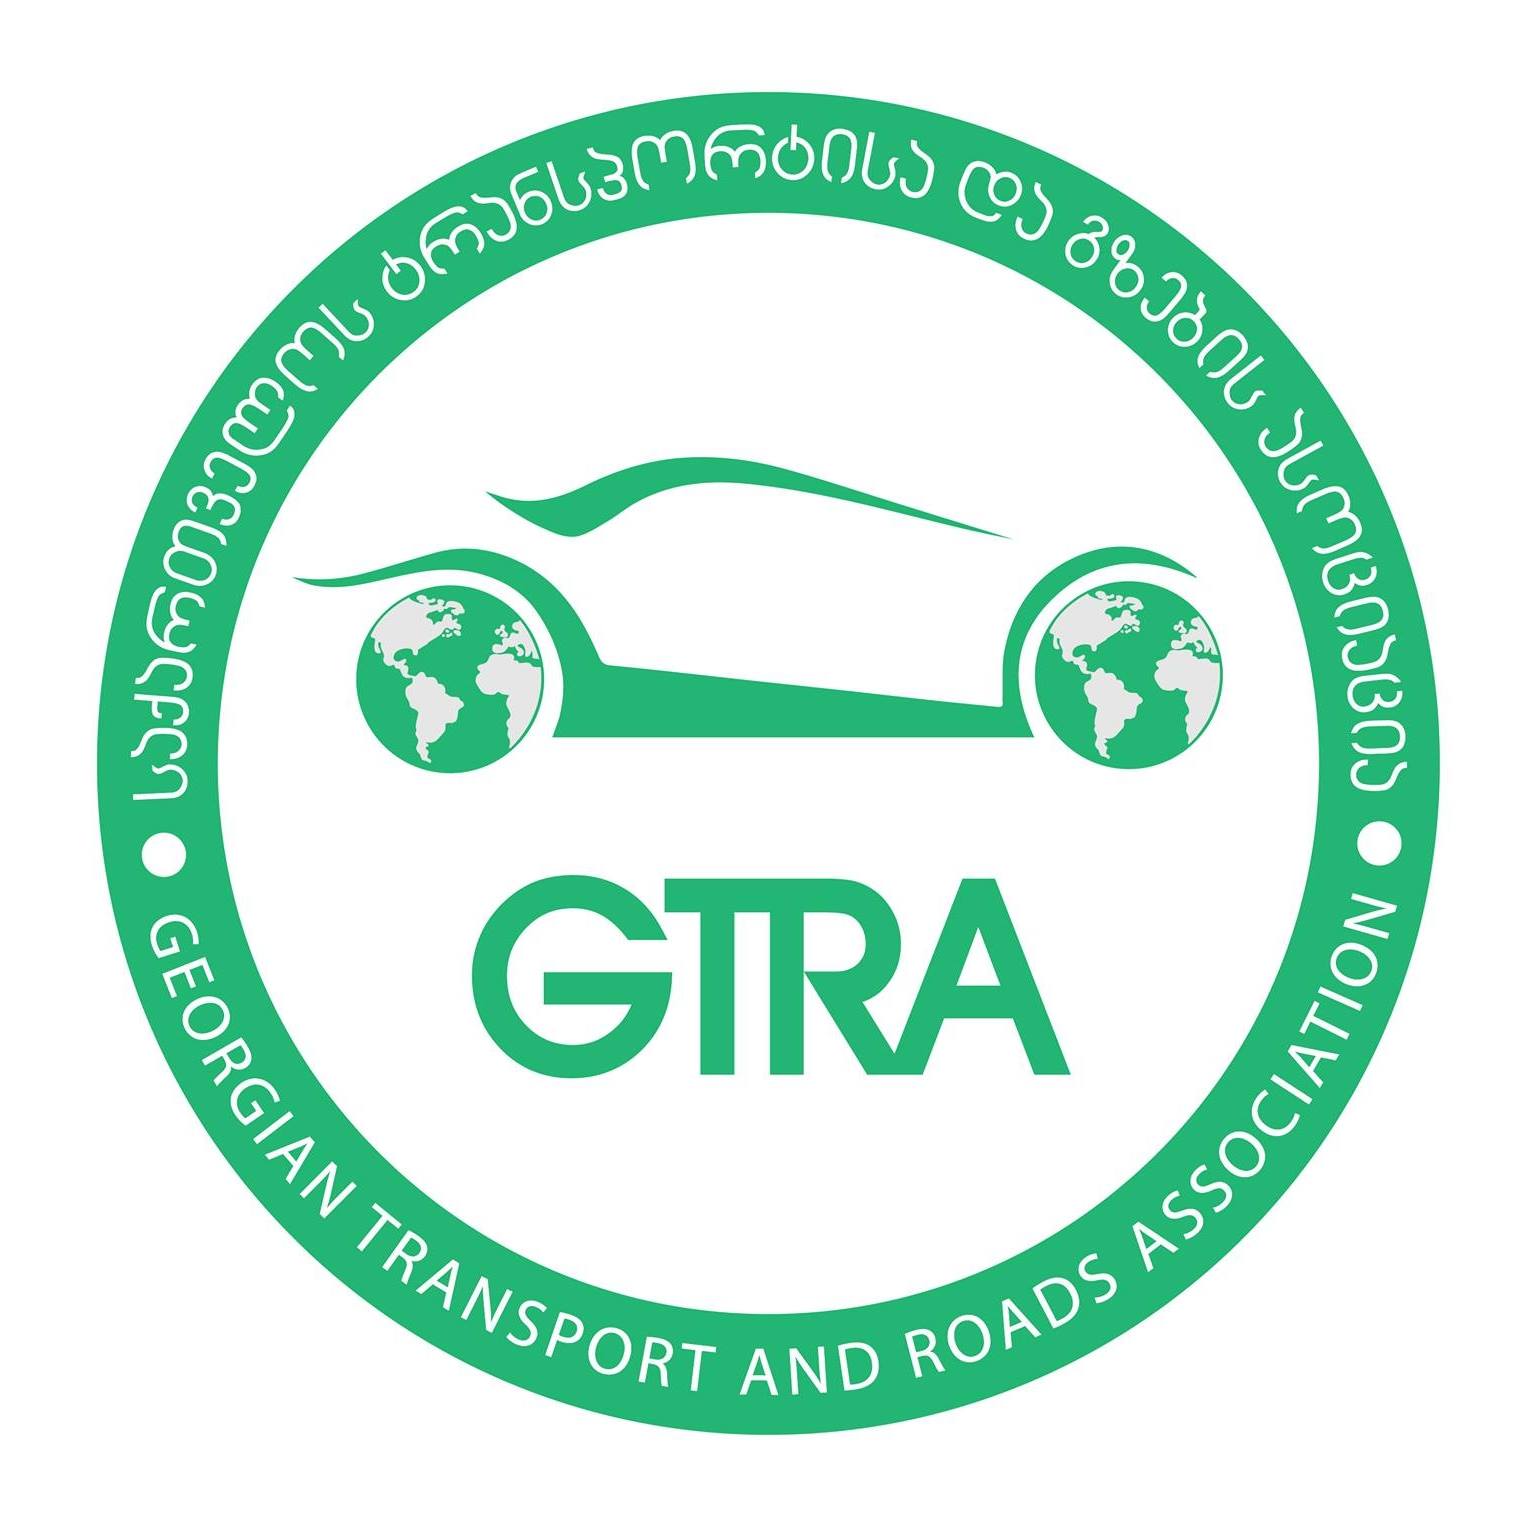 Georgian Transport and Roads Association